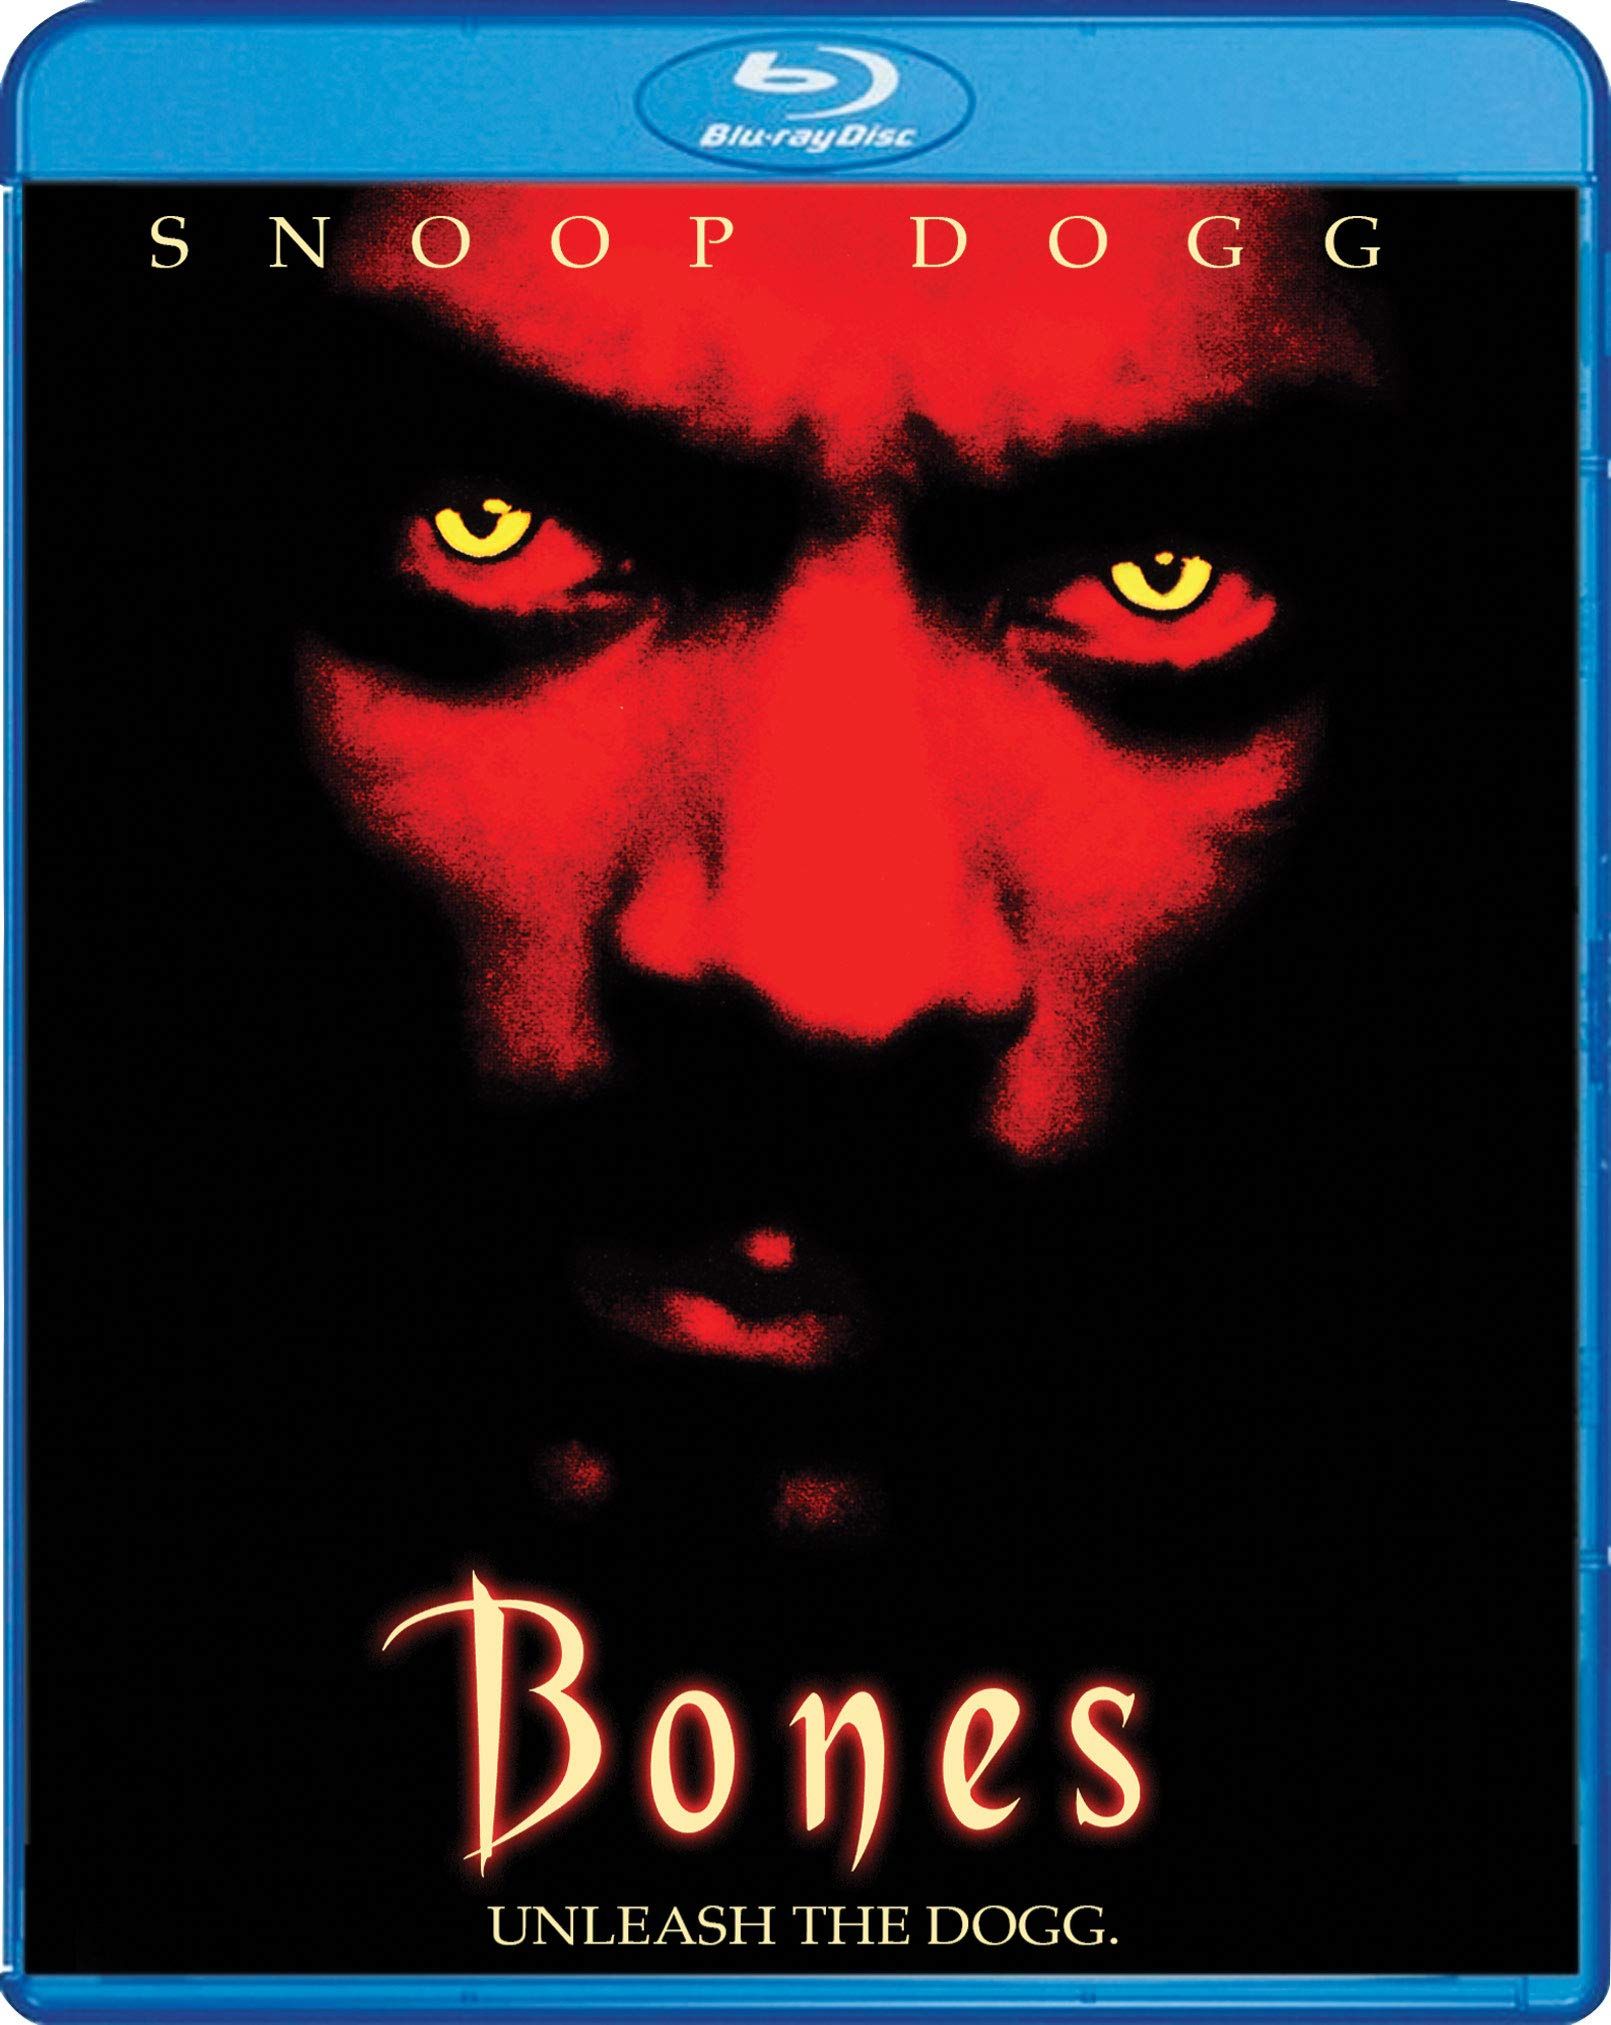 Bones (2001) Blu-ray